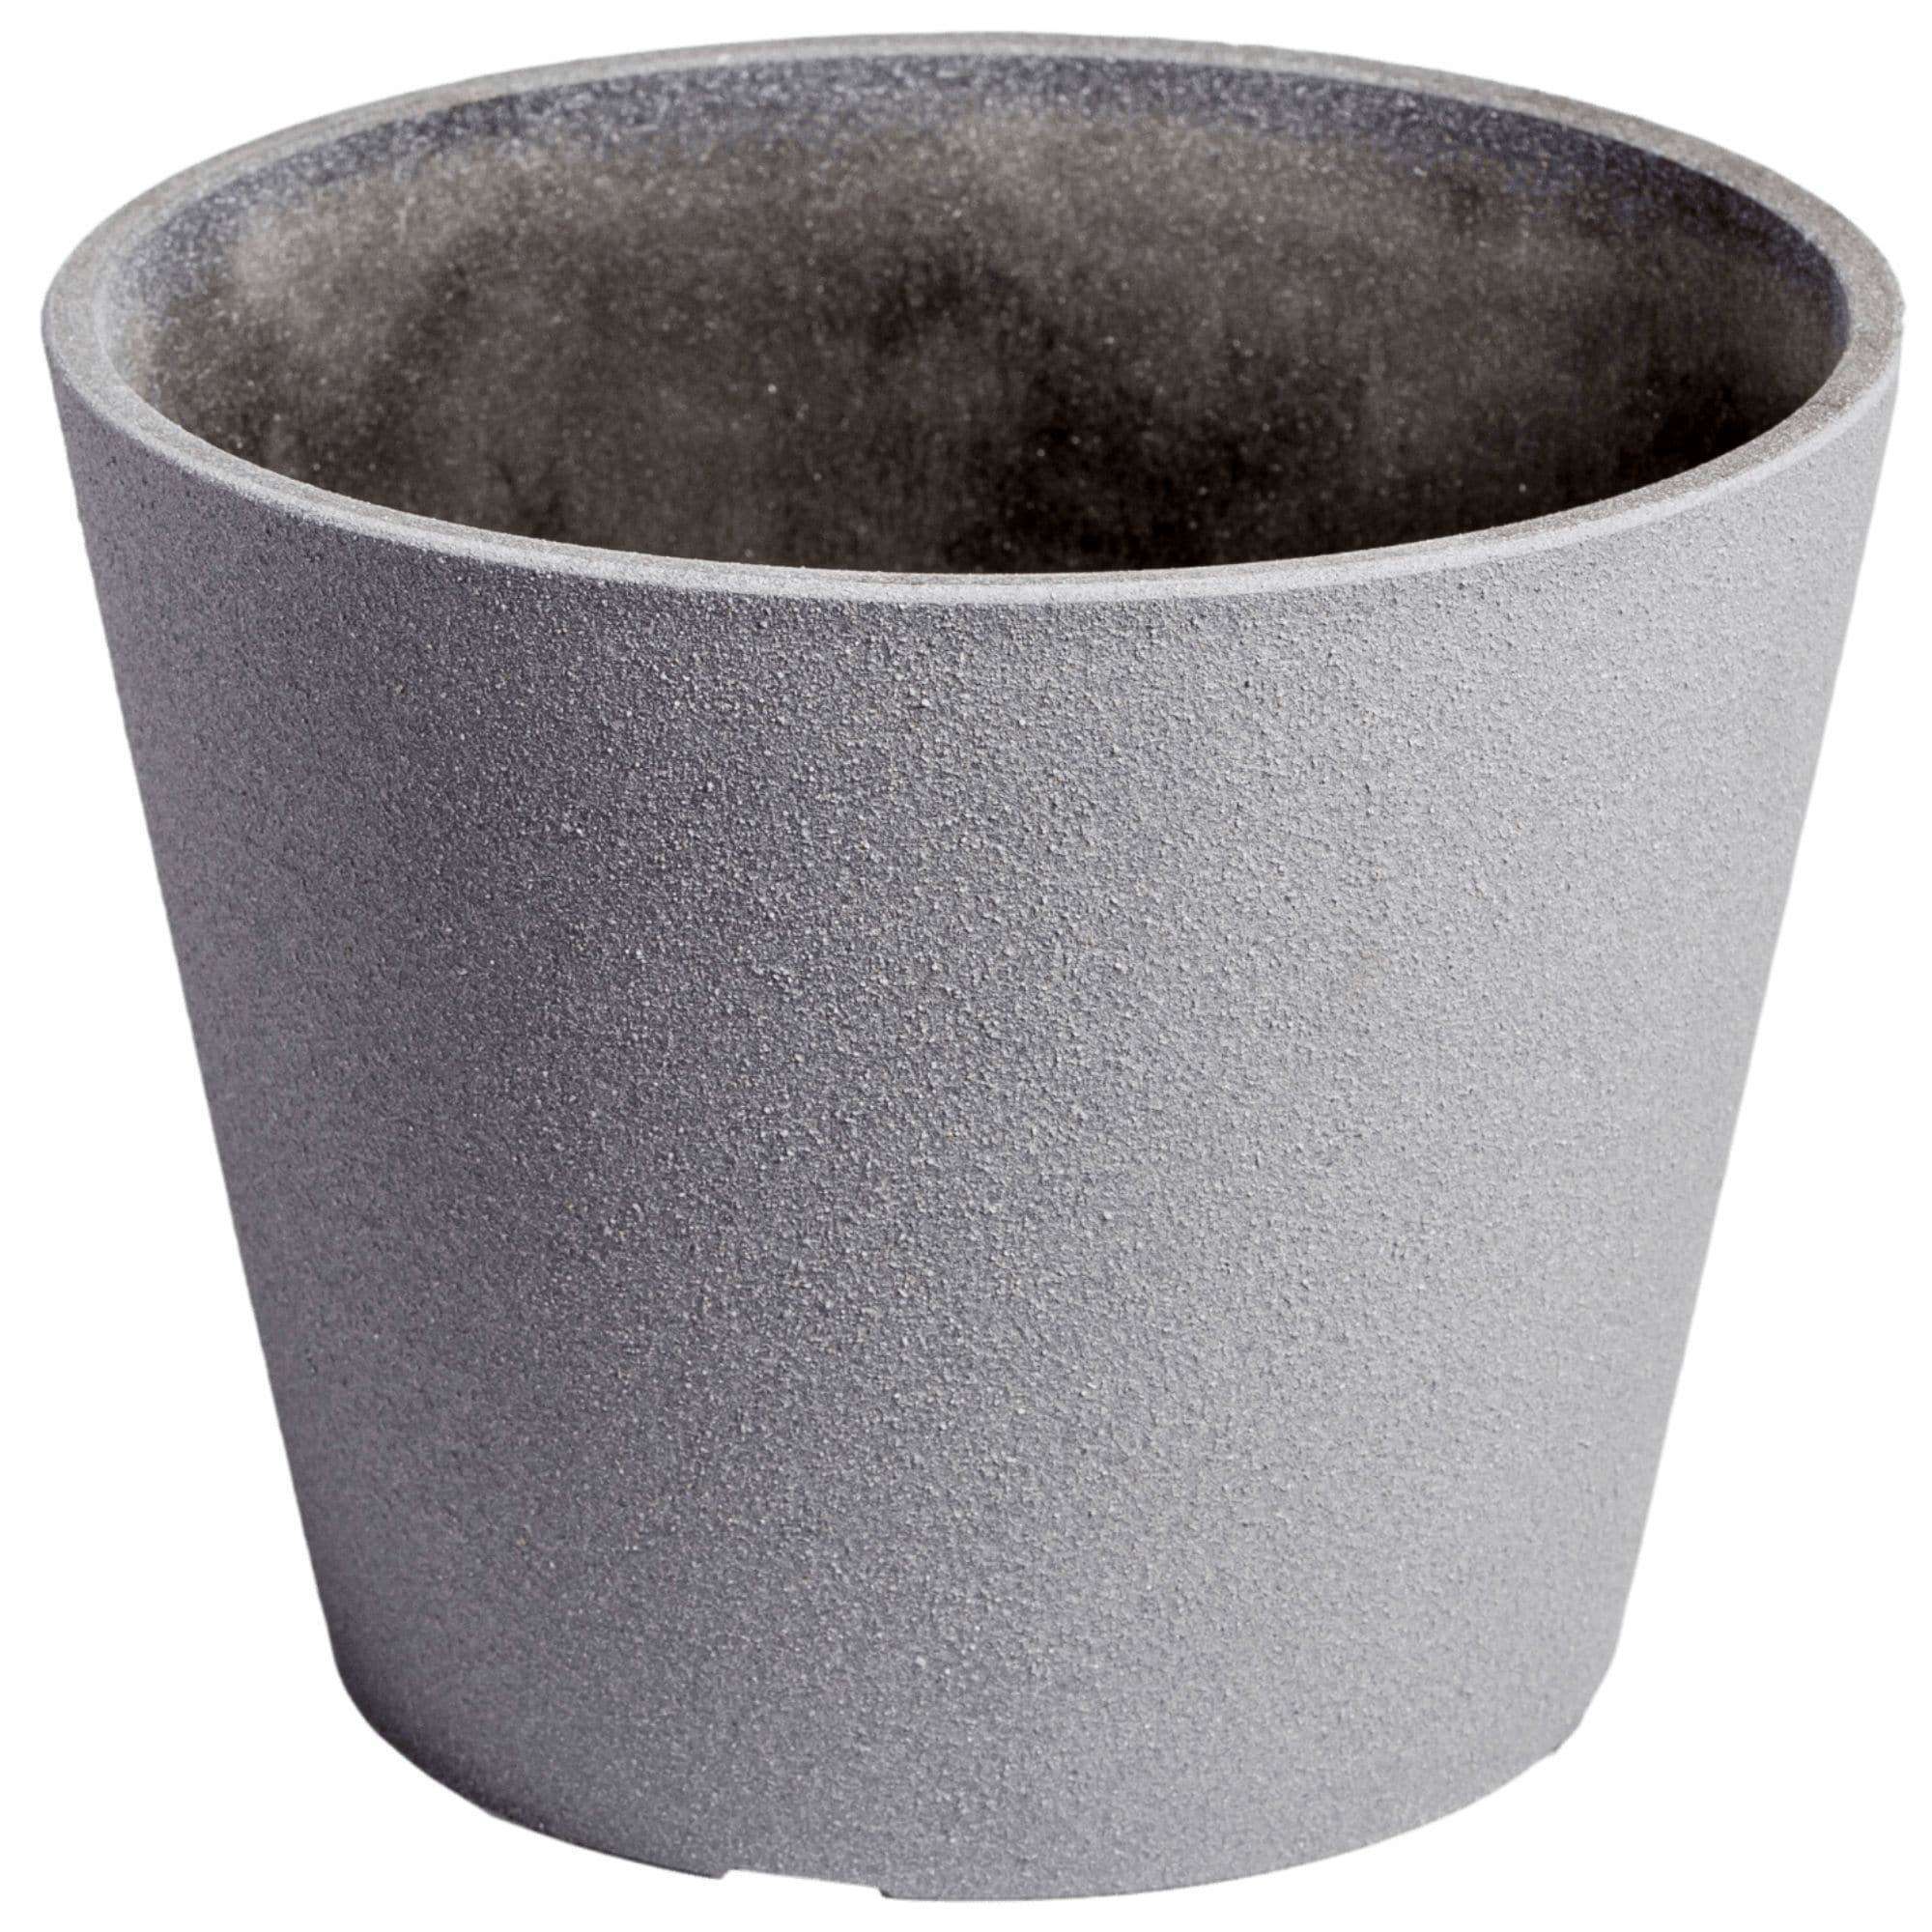 rendered-grey-planter-pot-25cm-436116.jpg